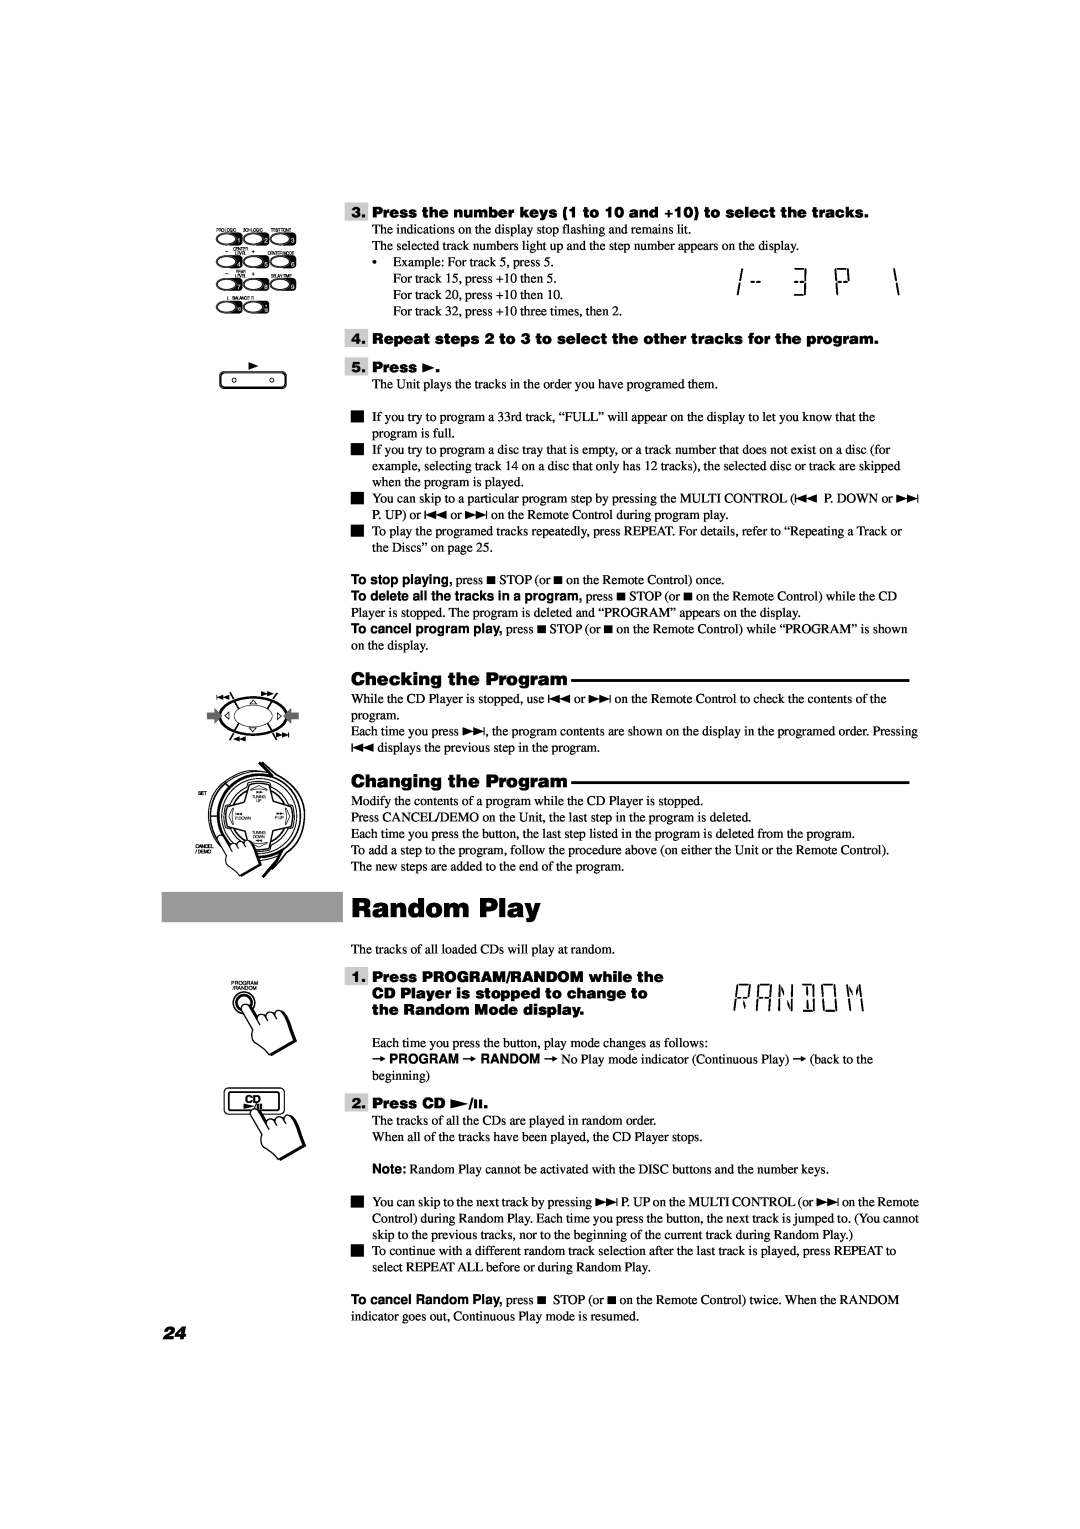 JVC MX-D602T manual Random Play, Checking the Program, Changing the Program, Press CD £/8 